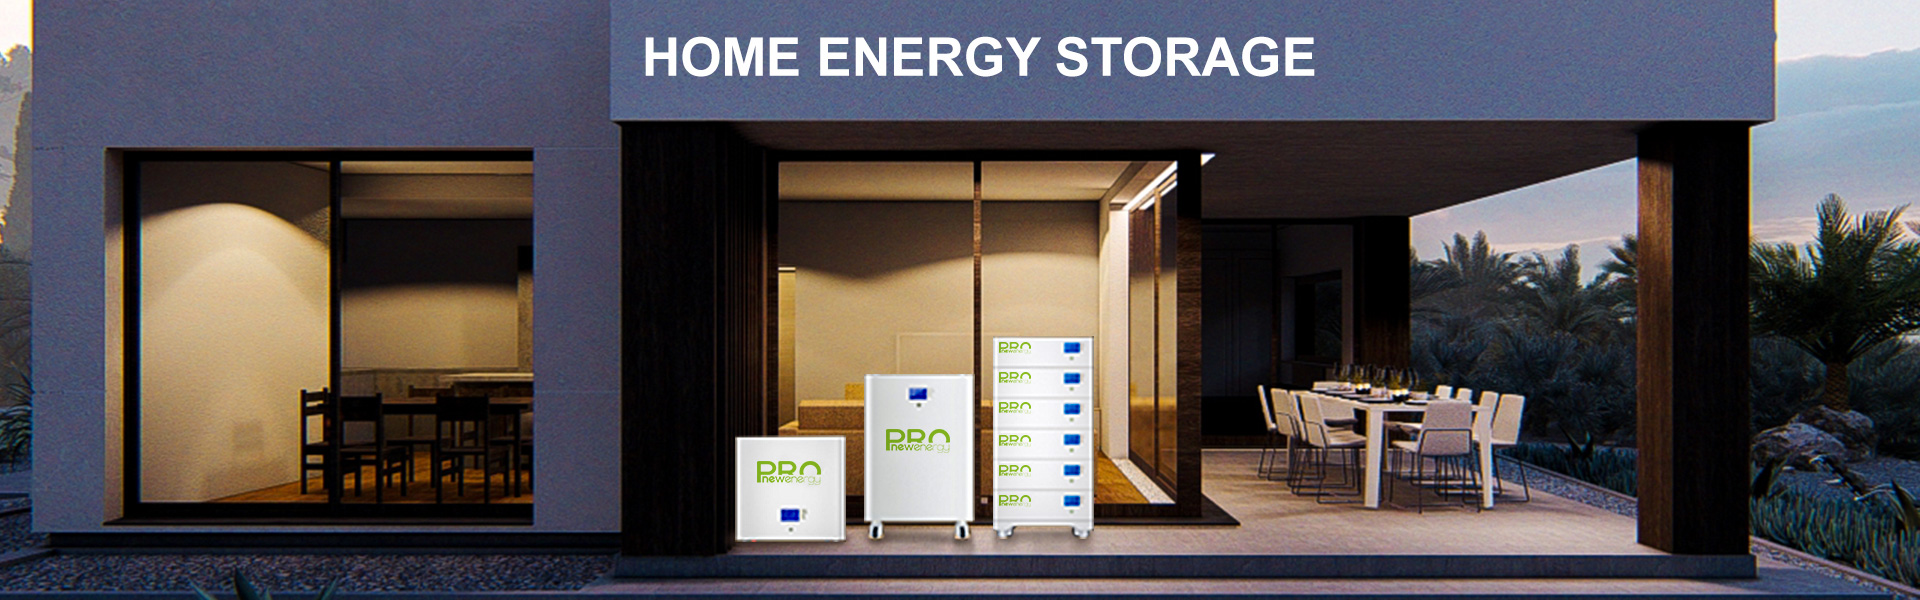 home energy storage